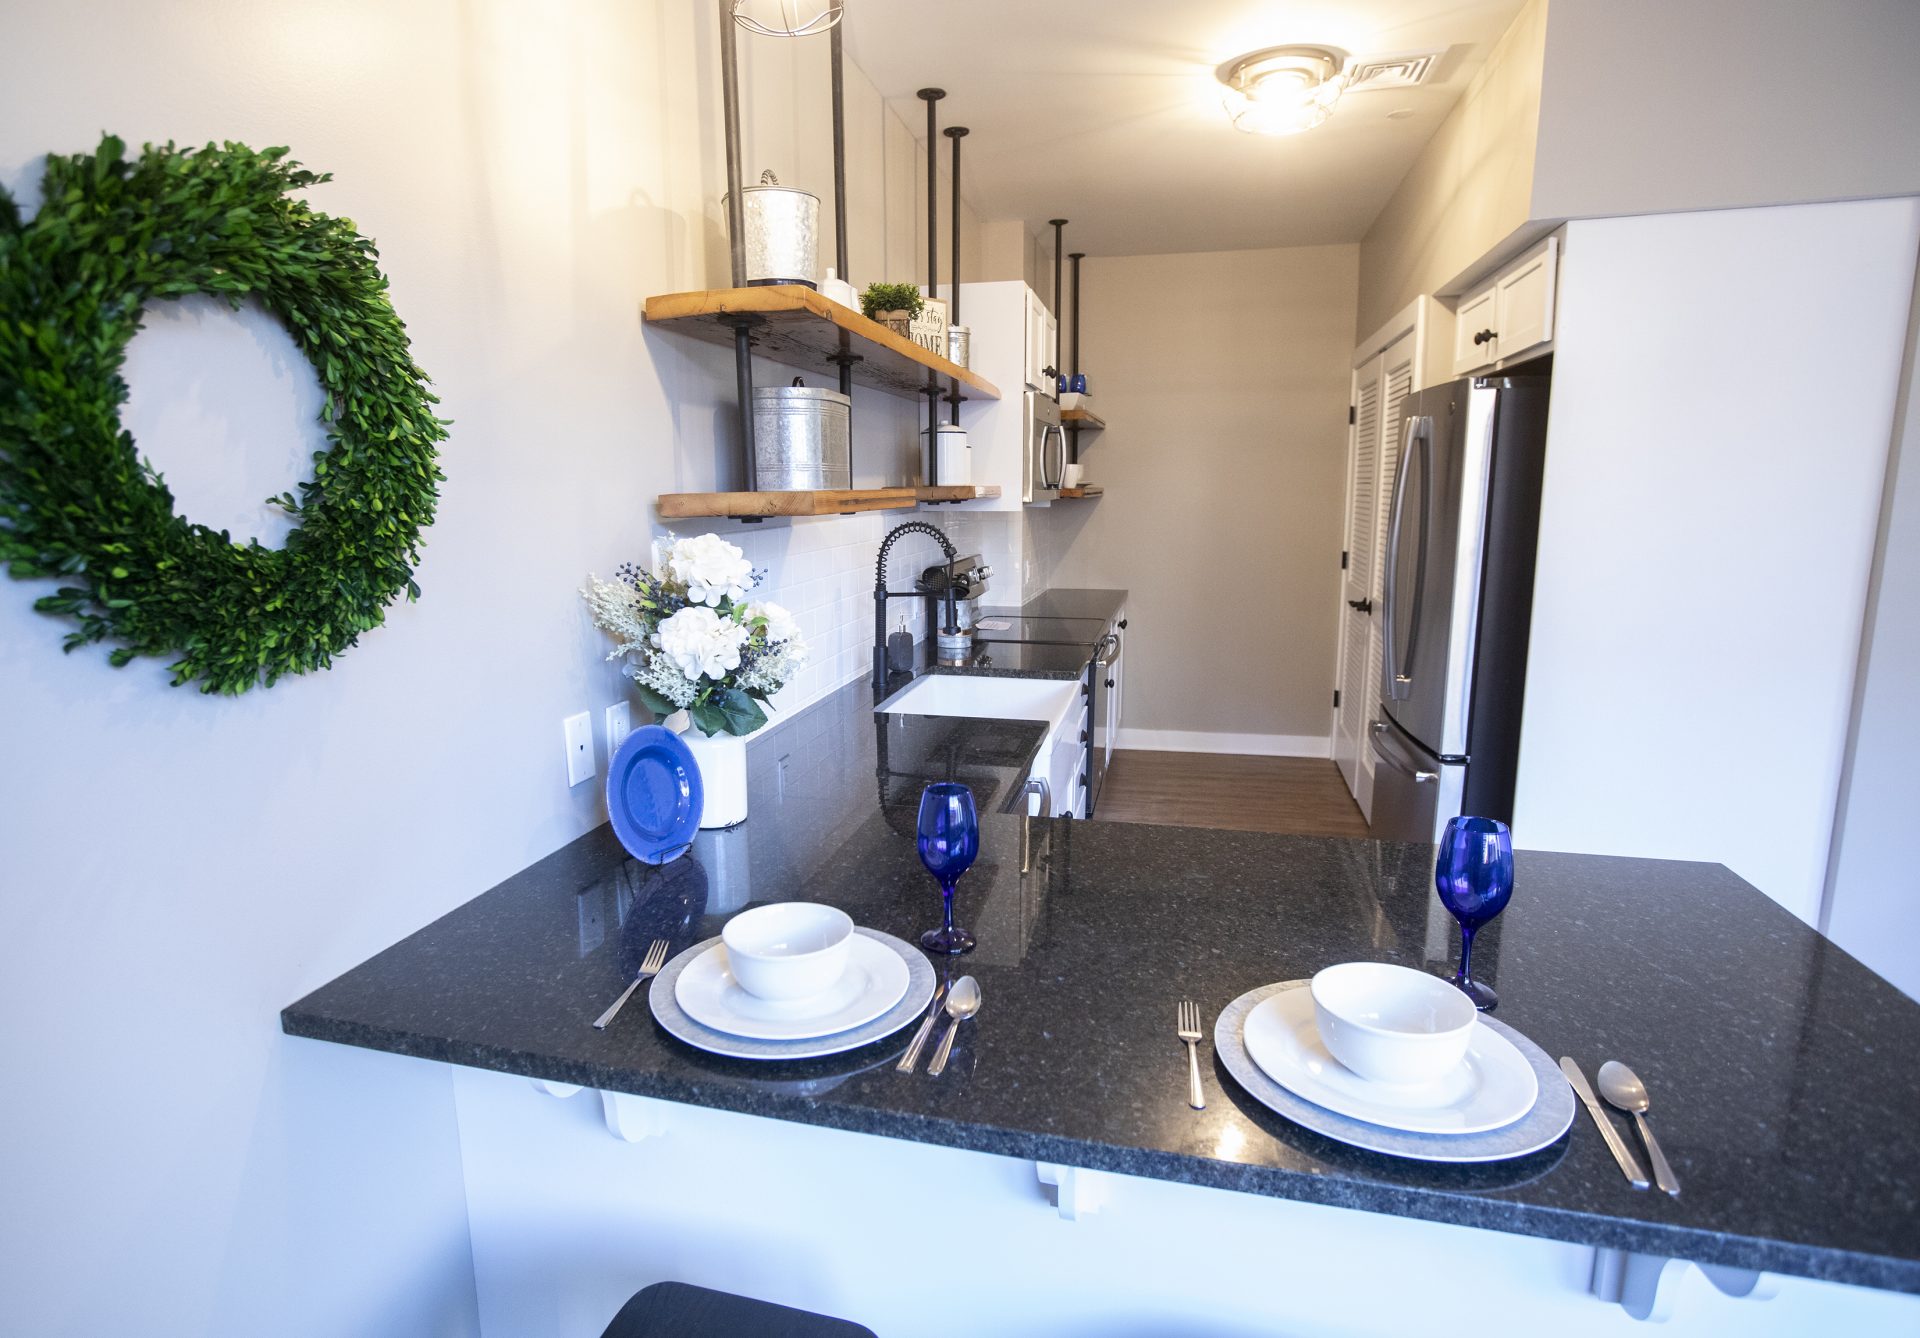 A kitchen in the BenMar Apartments in Harrisburg. Dec. 20, 2019.